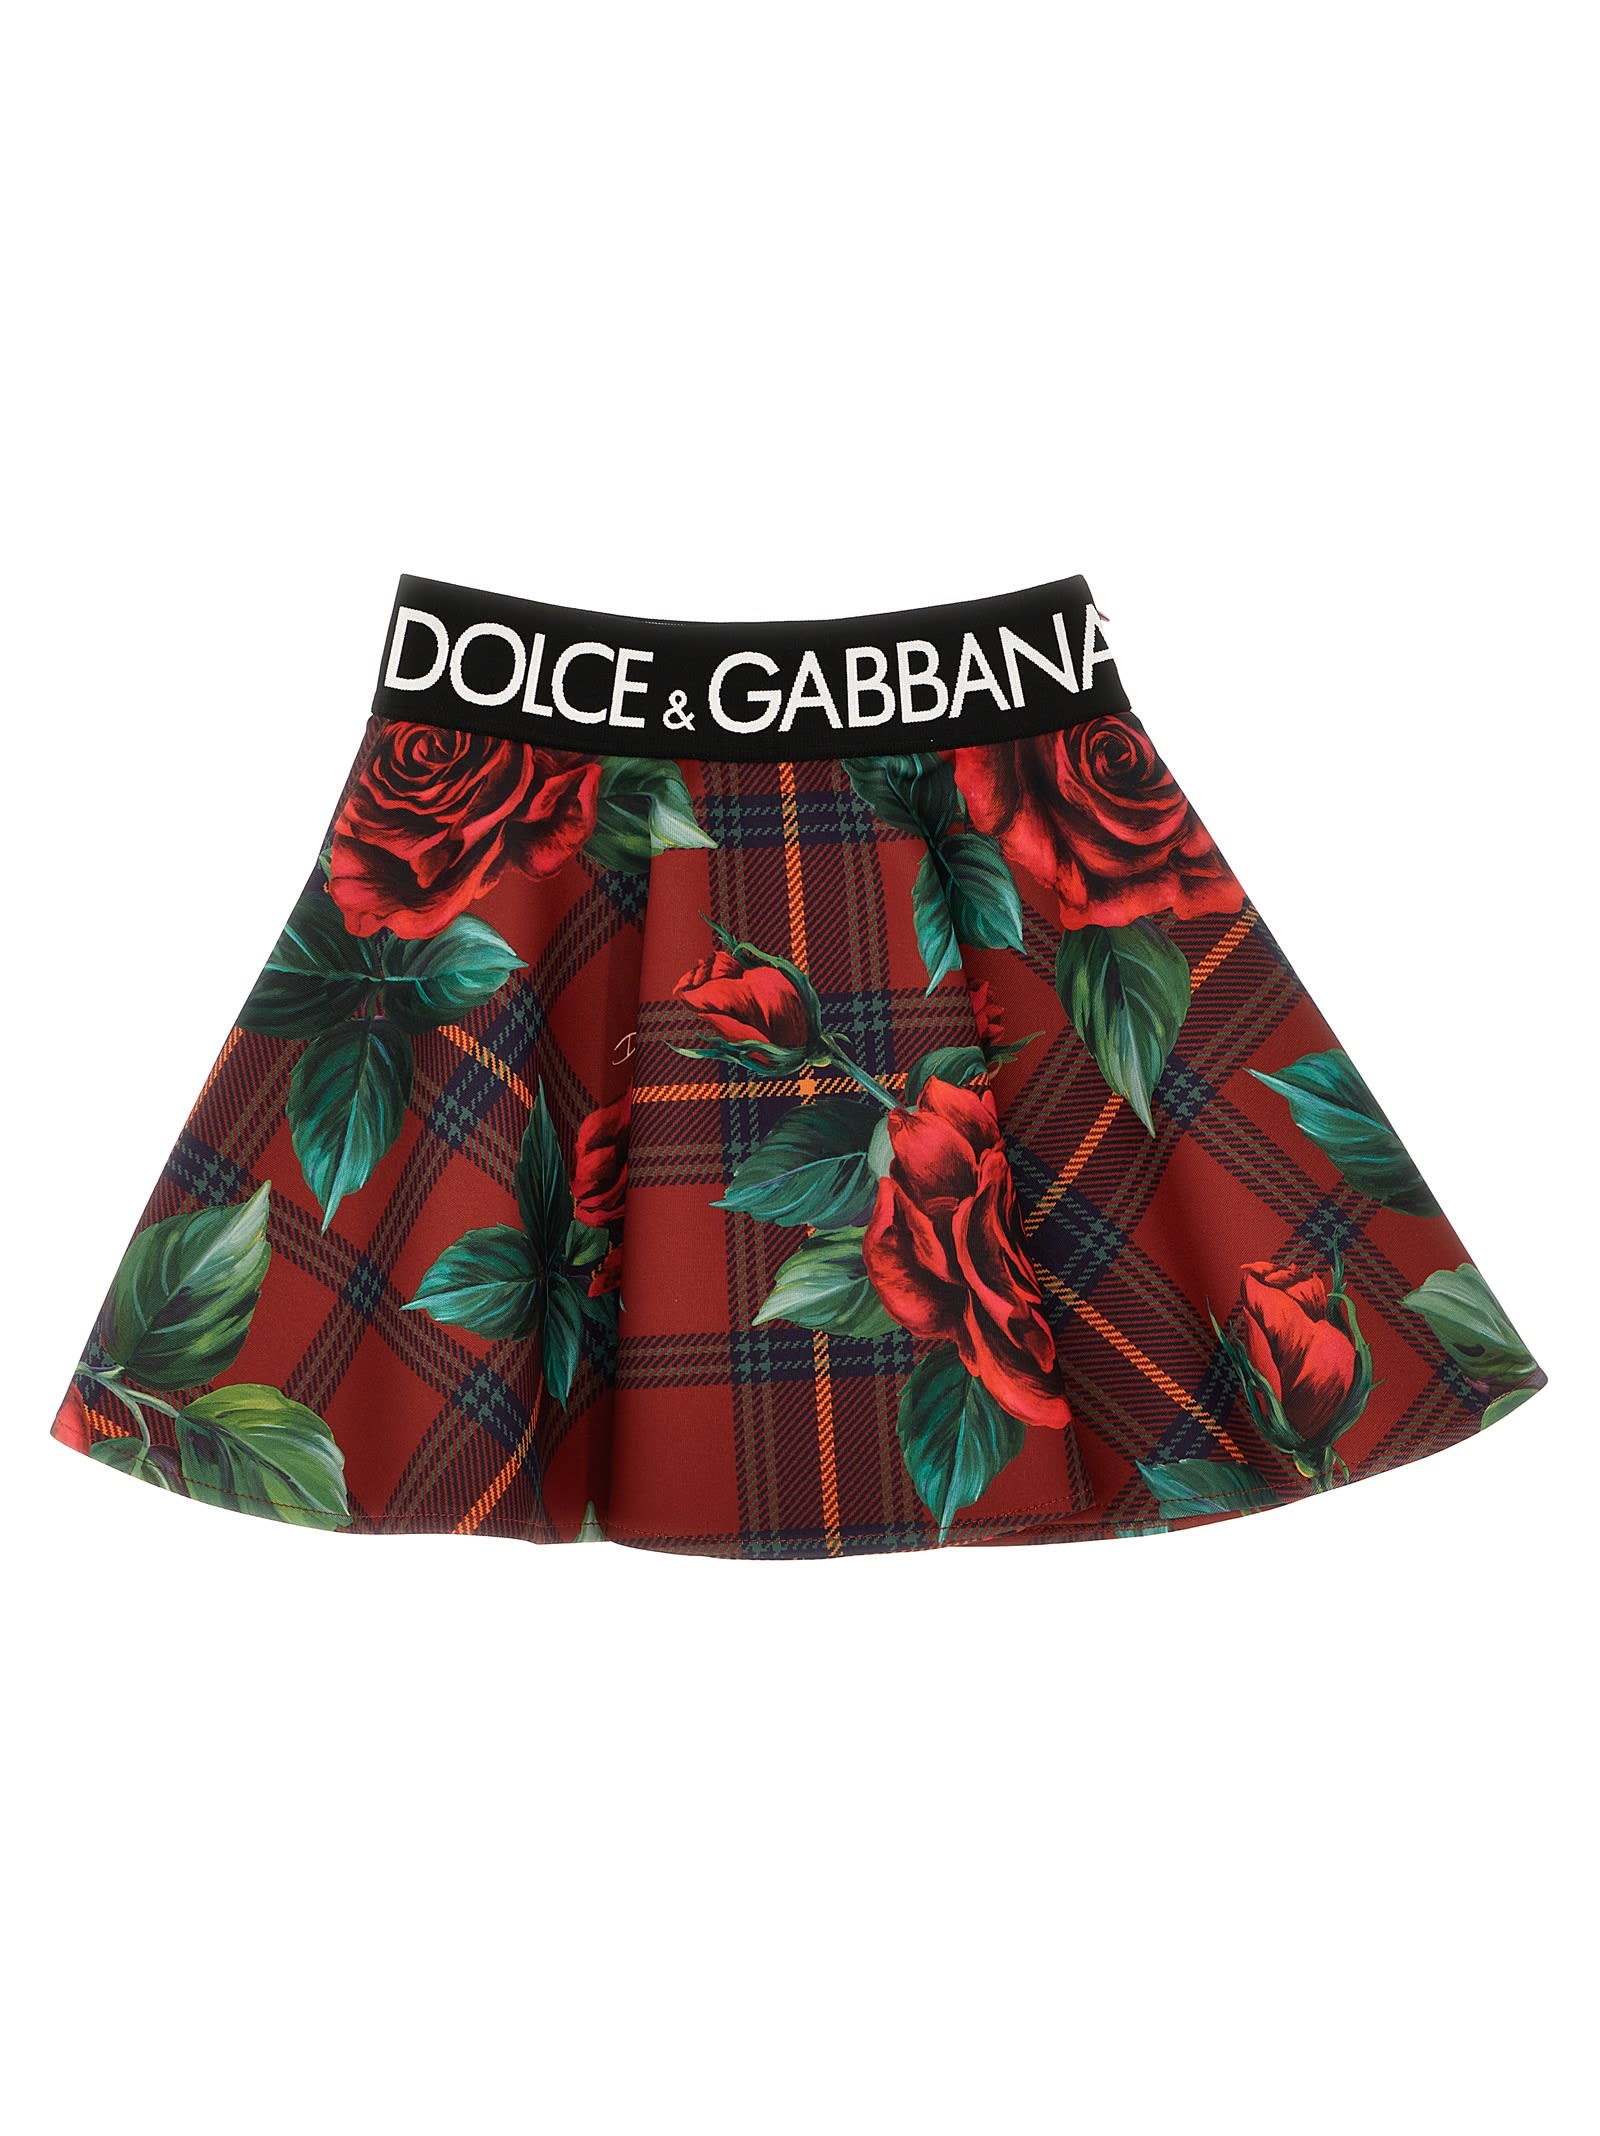 Dolce & Gabbana back To School Skirt